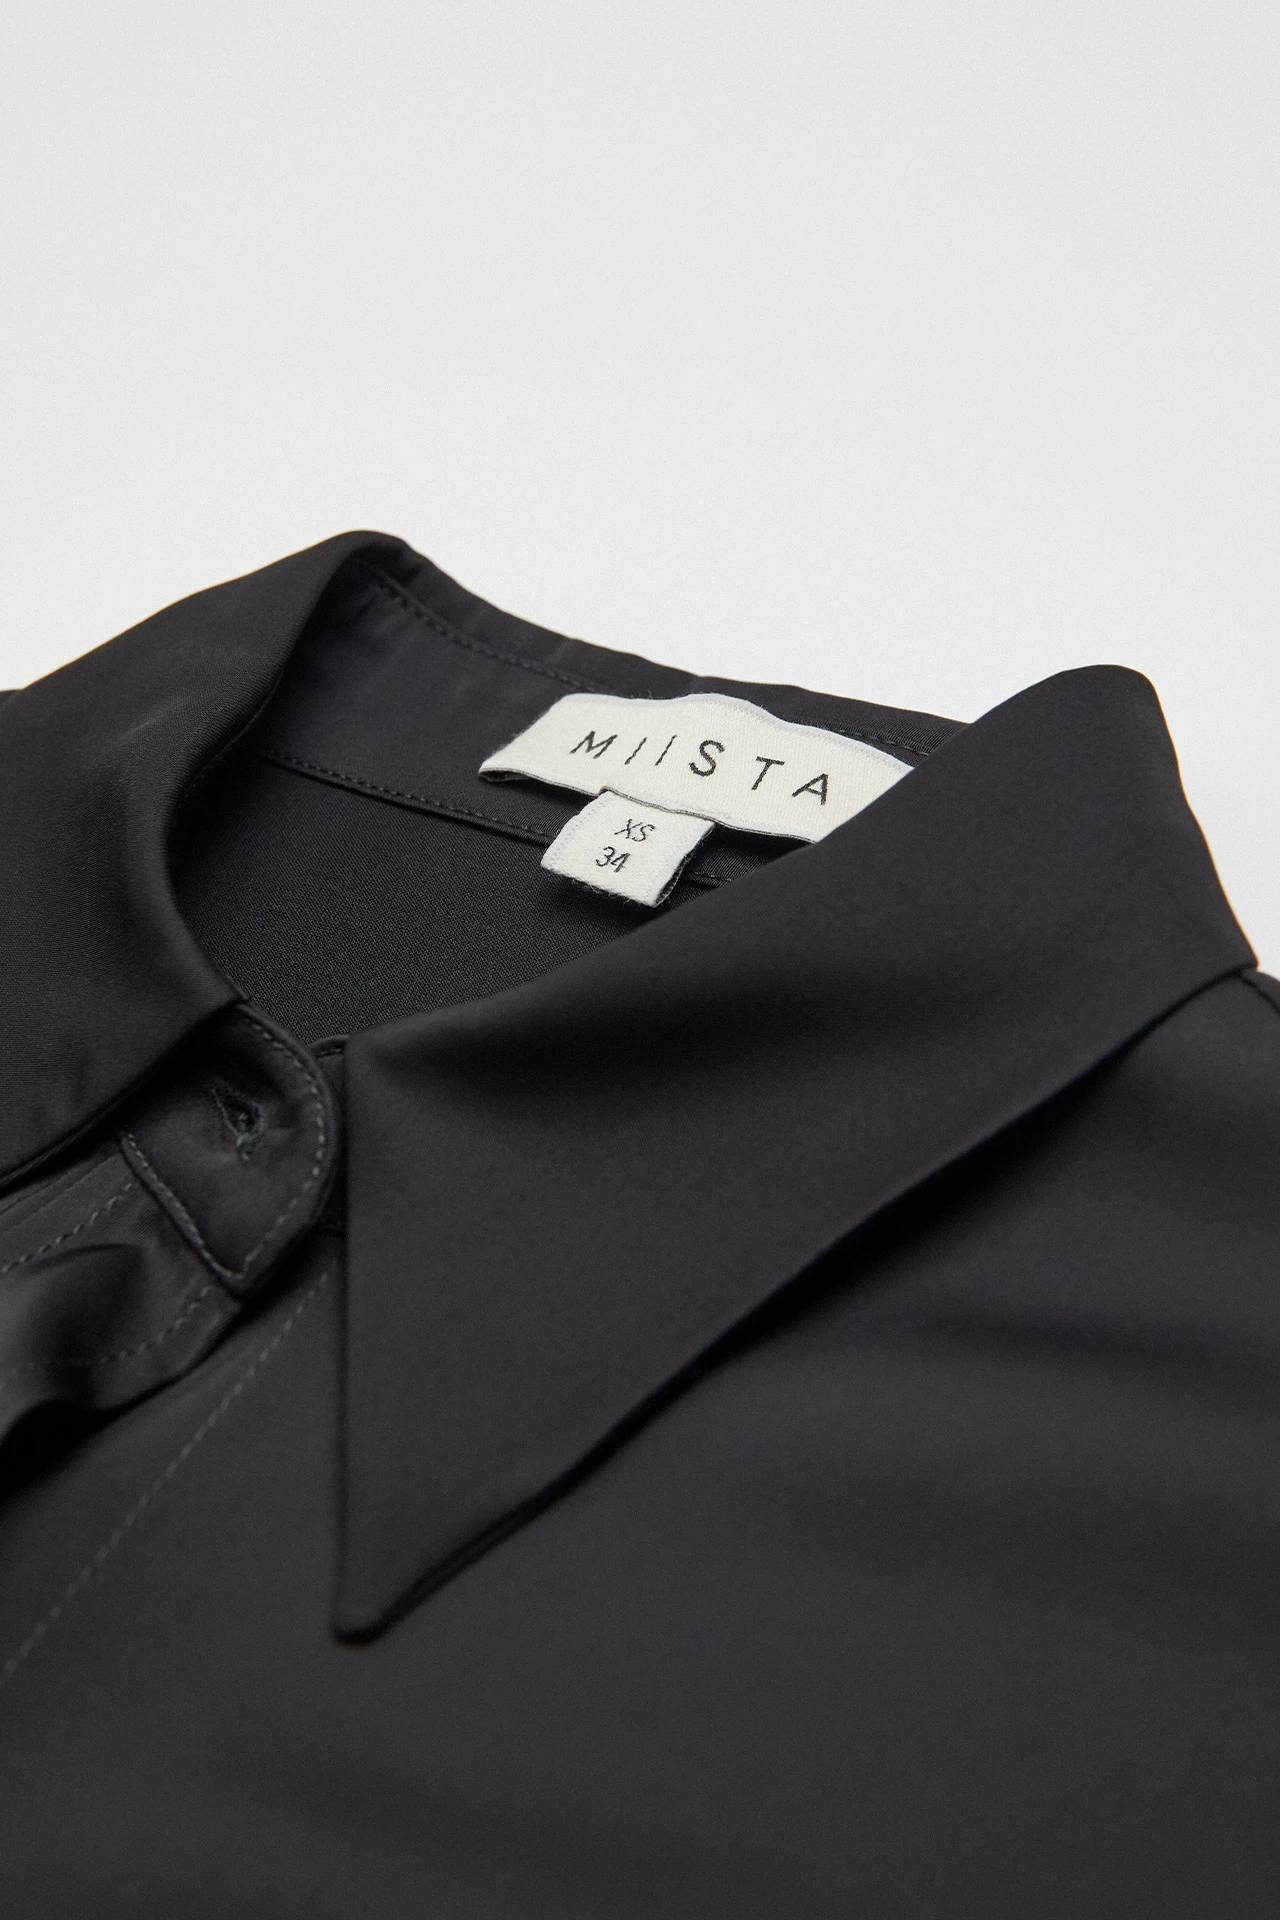 Miista-marques-black-shirt-02